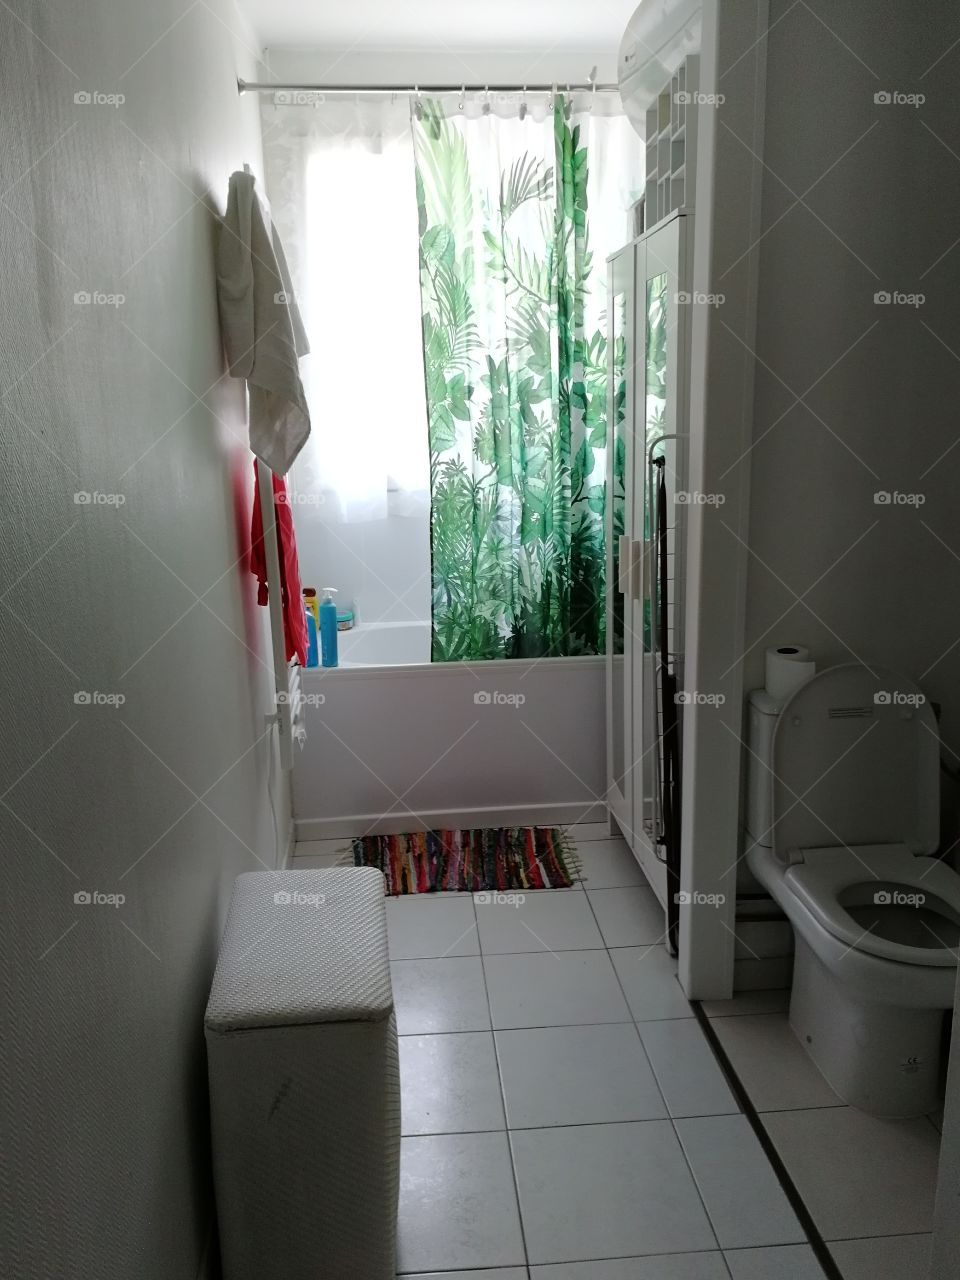 bathroom daylight curtain palmtree